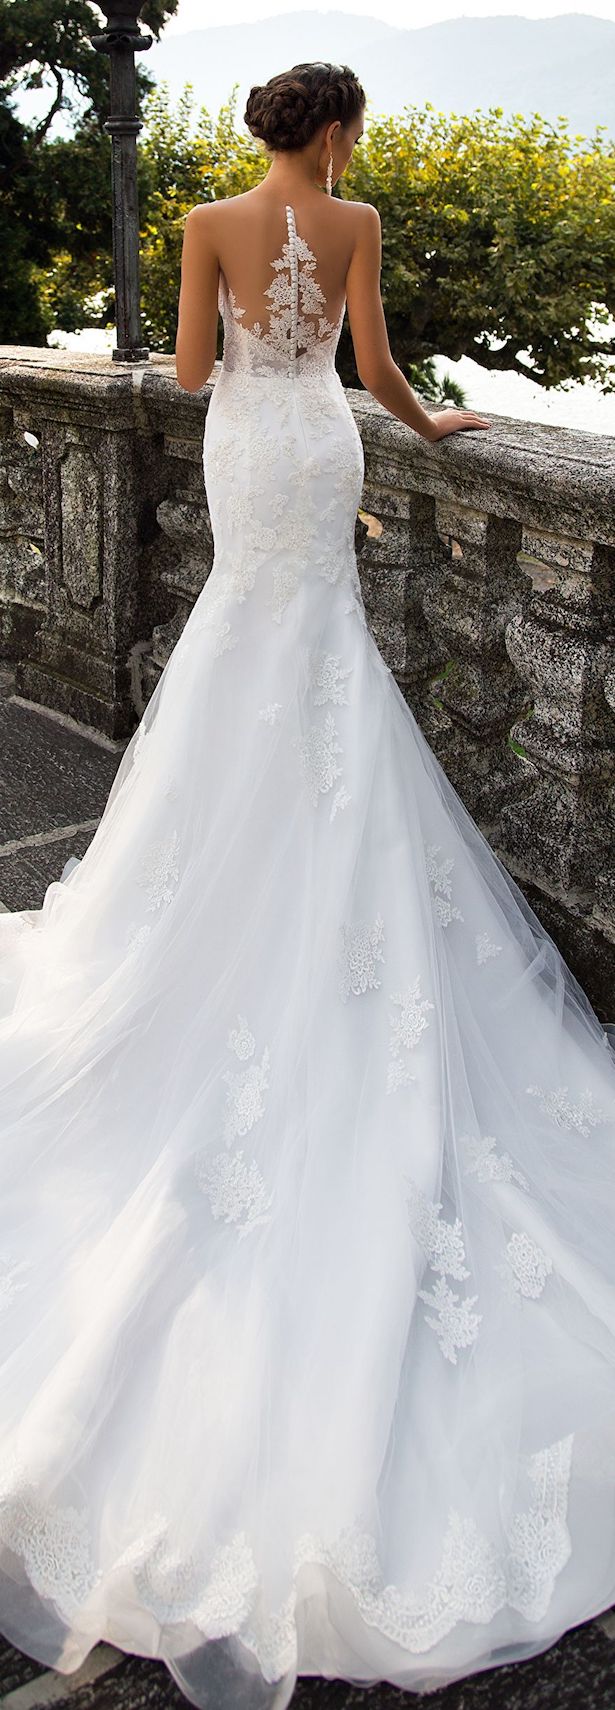 Wedding Dress by Milla Nova White Desire 2017 Bridal Collection - Genvy